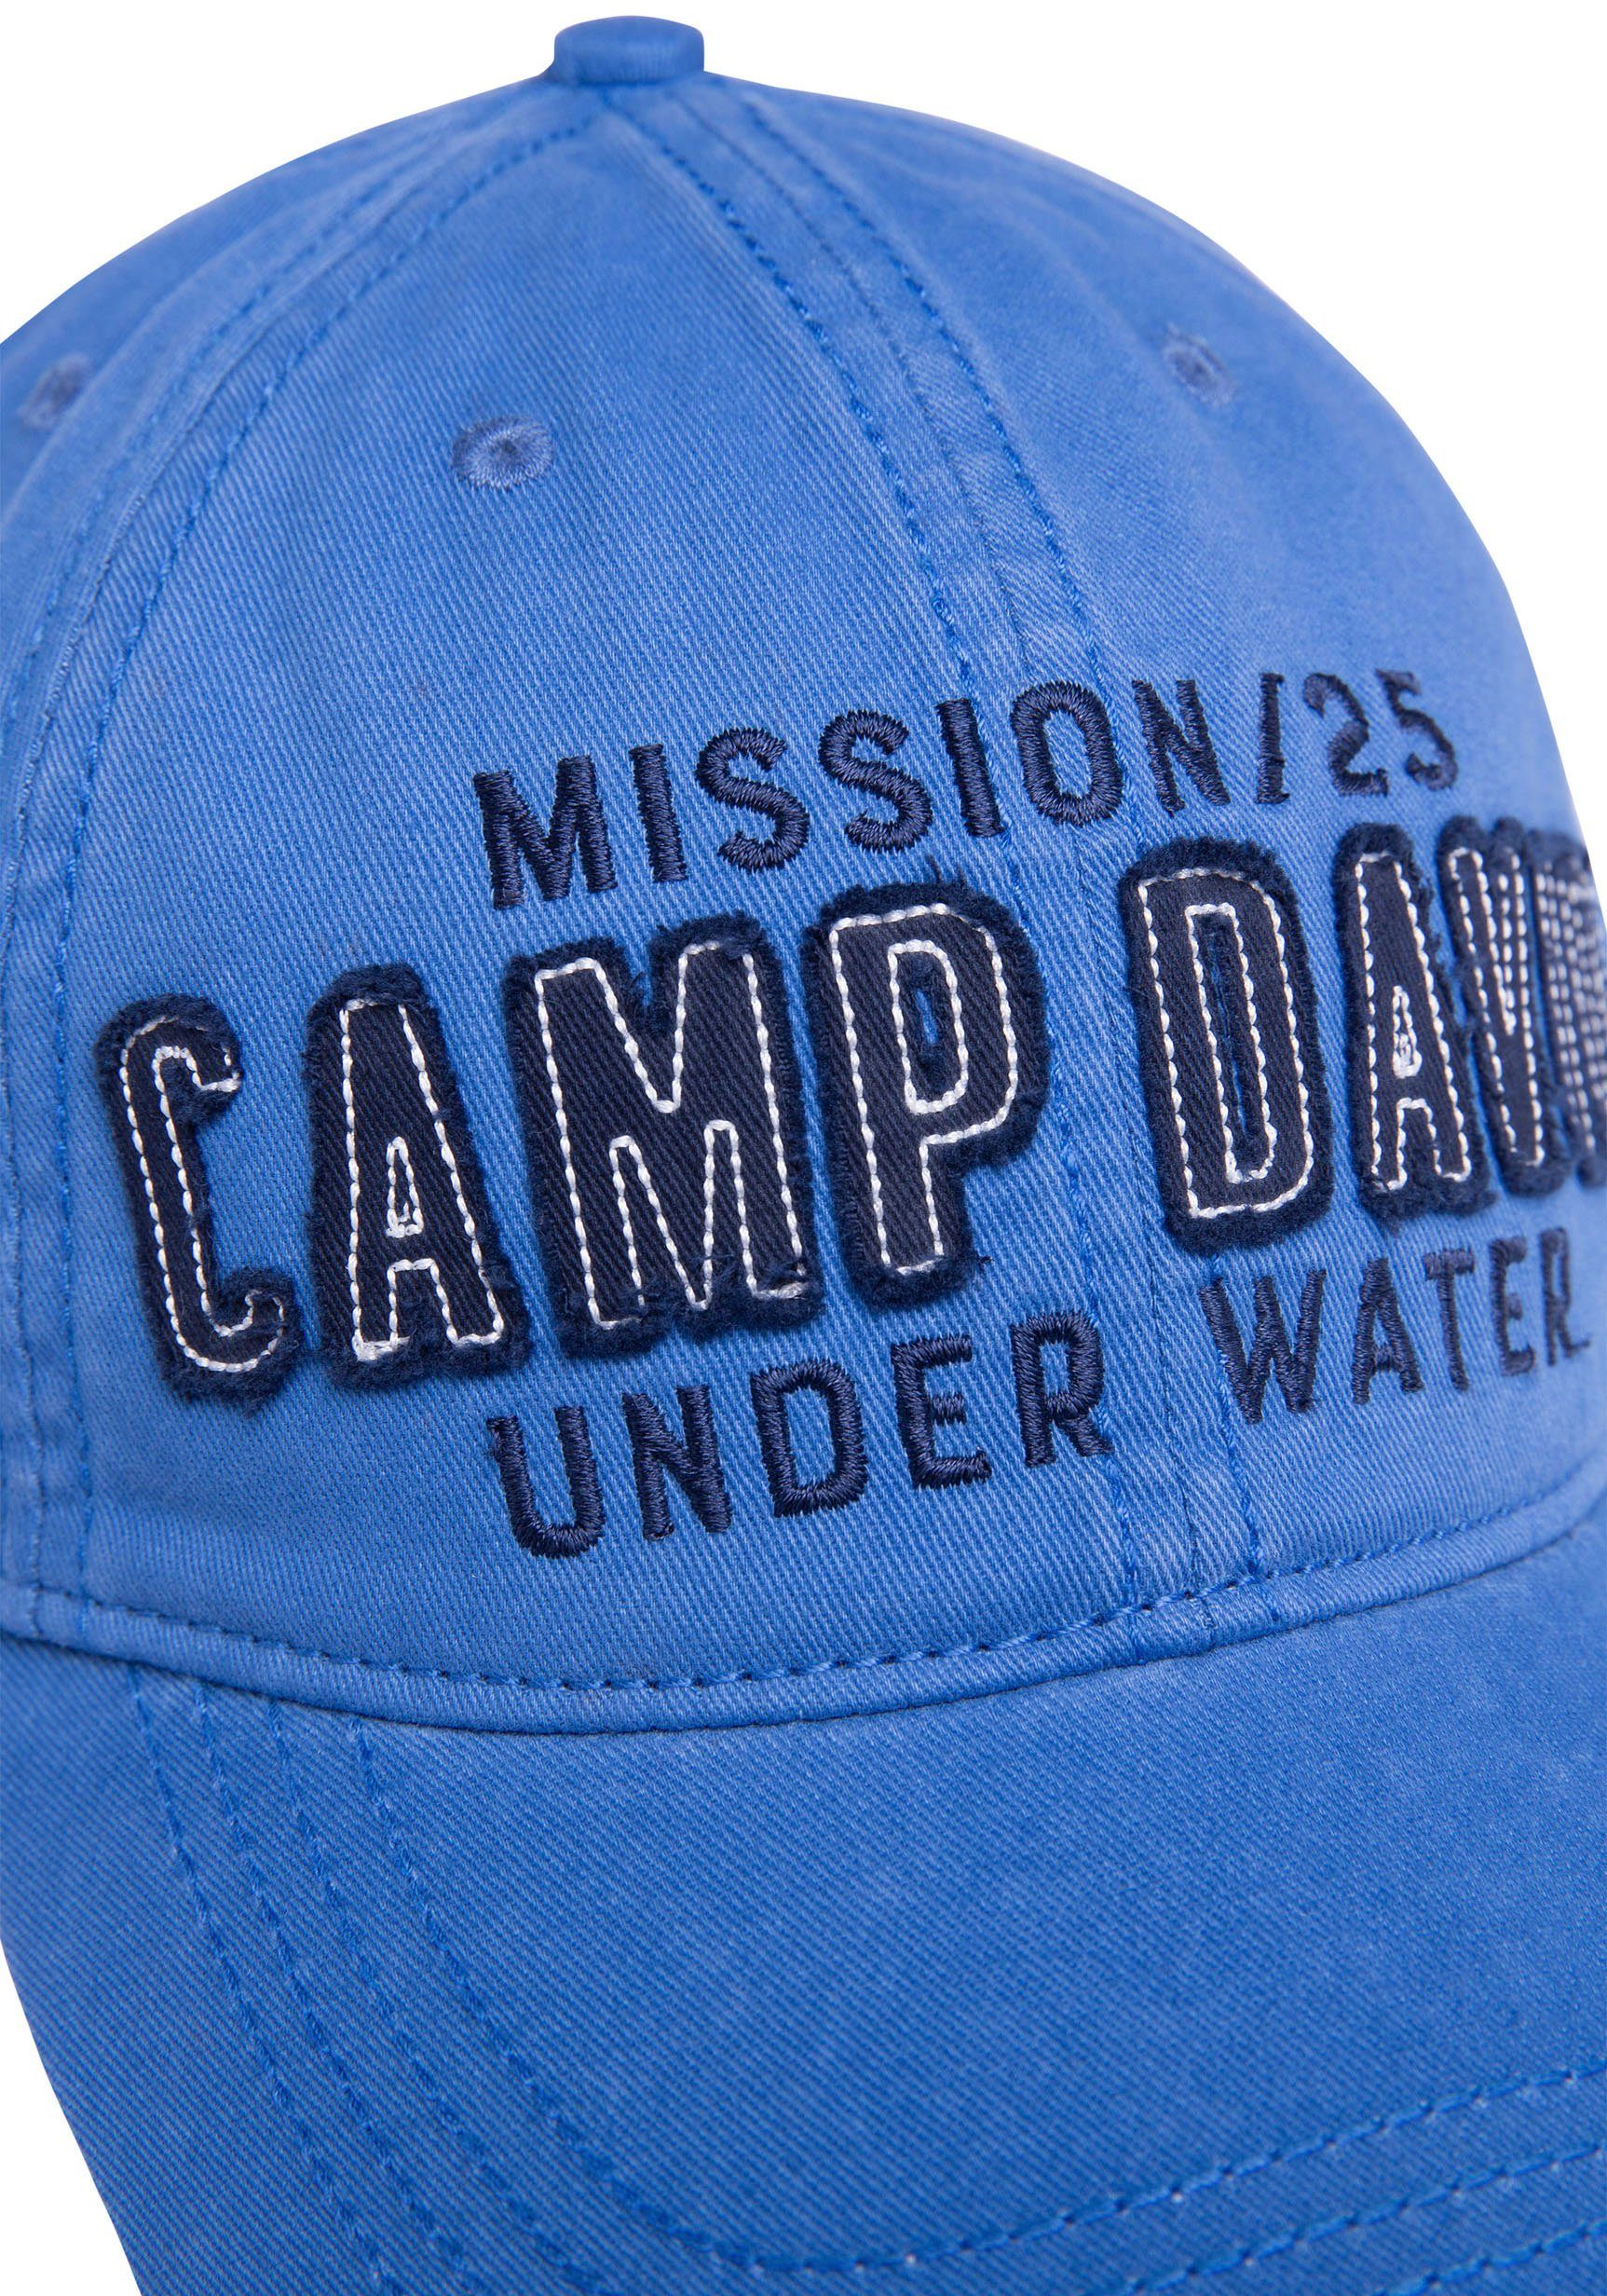 Cap DAVID Baseball pacific mit blue gewaschener CAMP Optik